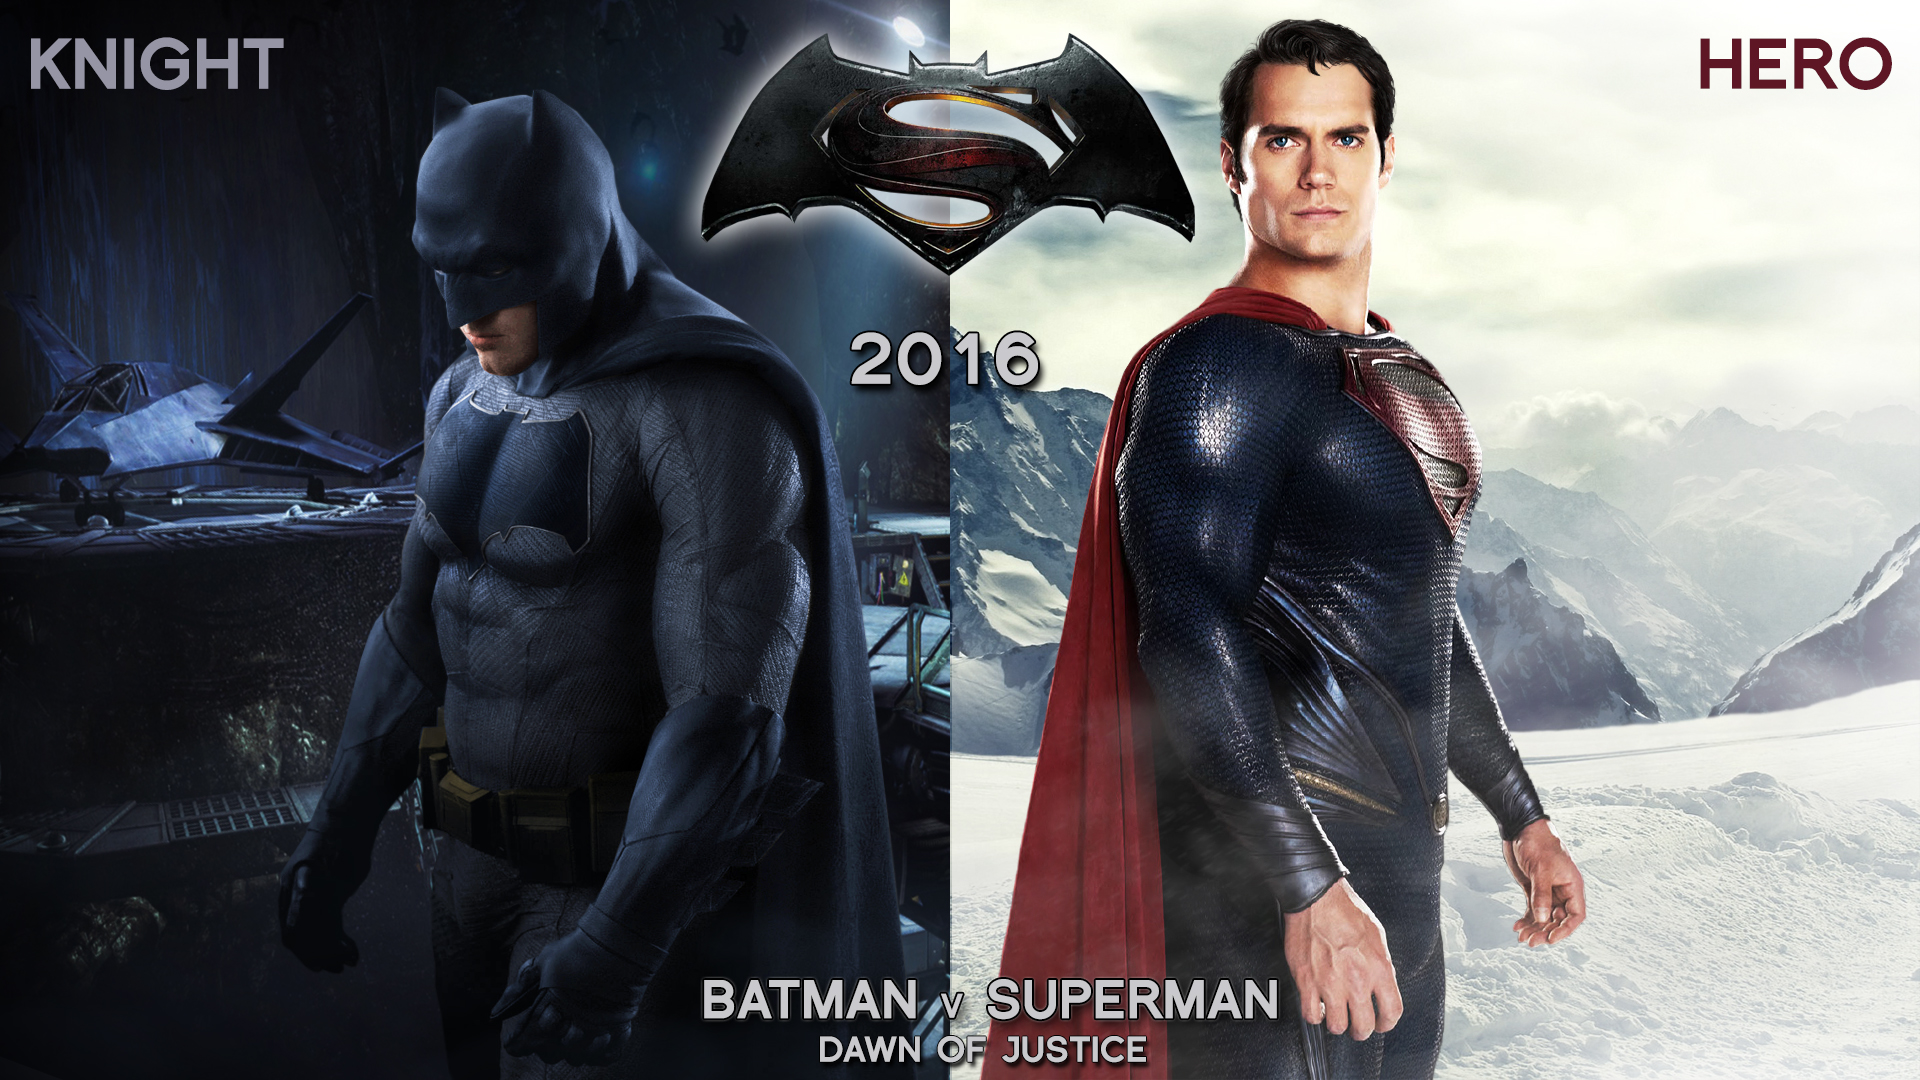 Batman V Superman Knight And Hero Wallpaper Search More